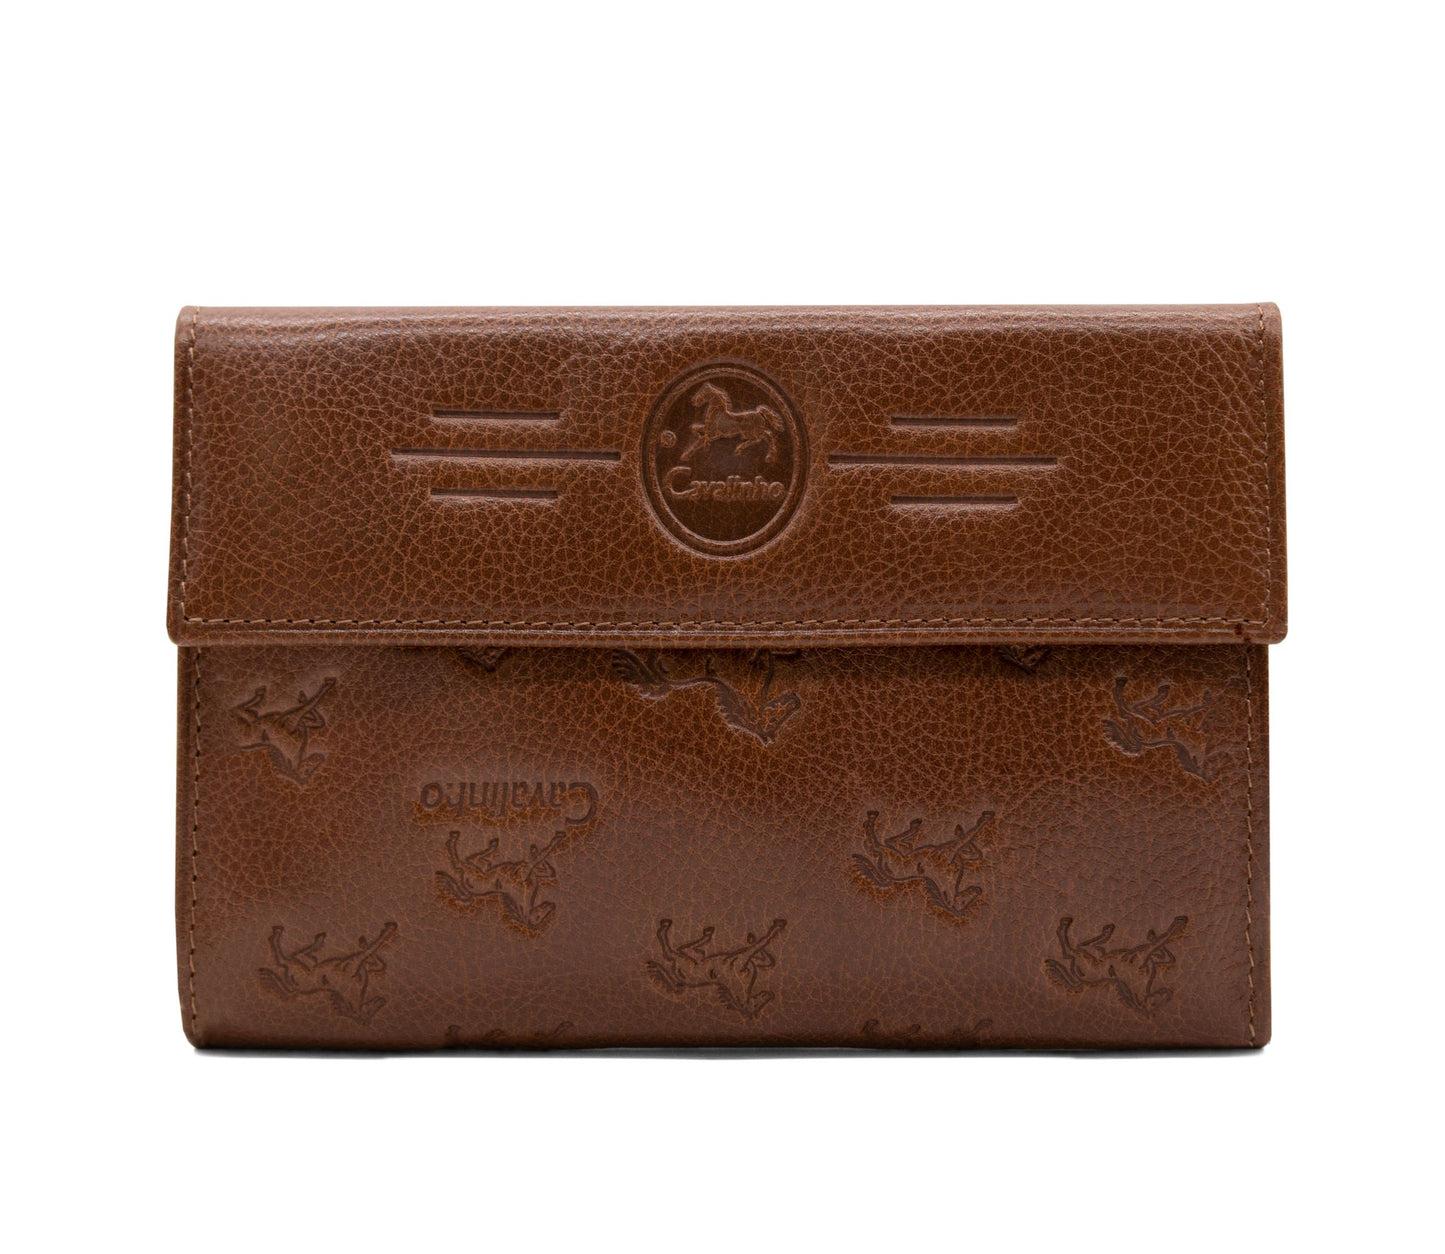 Cavalinho Signature Leather Wallet - SaddleBrown - 28090205.13_3